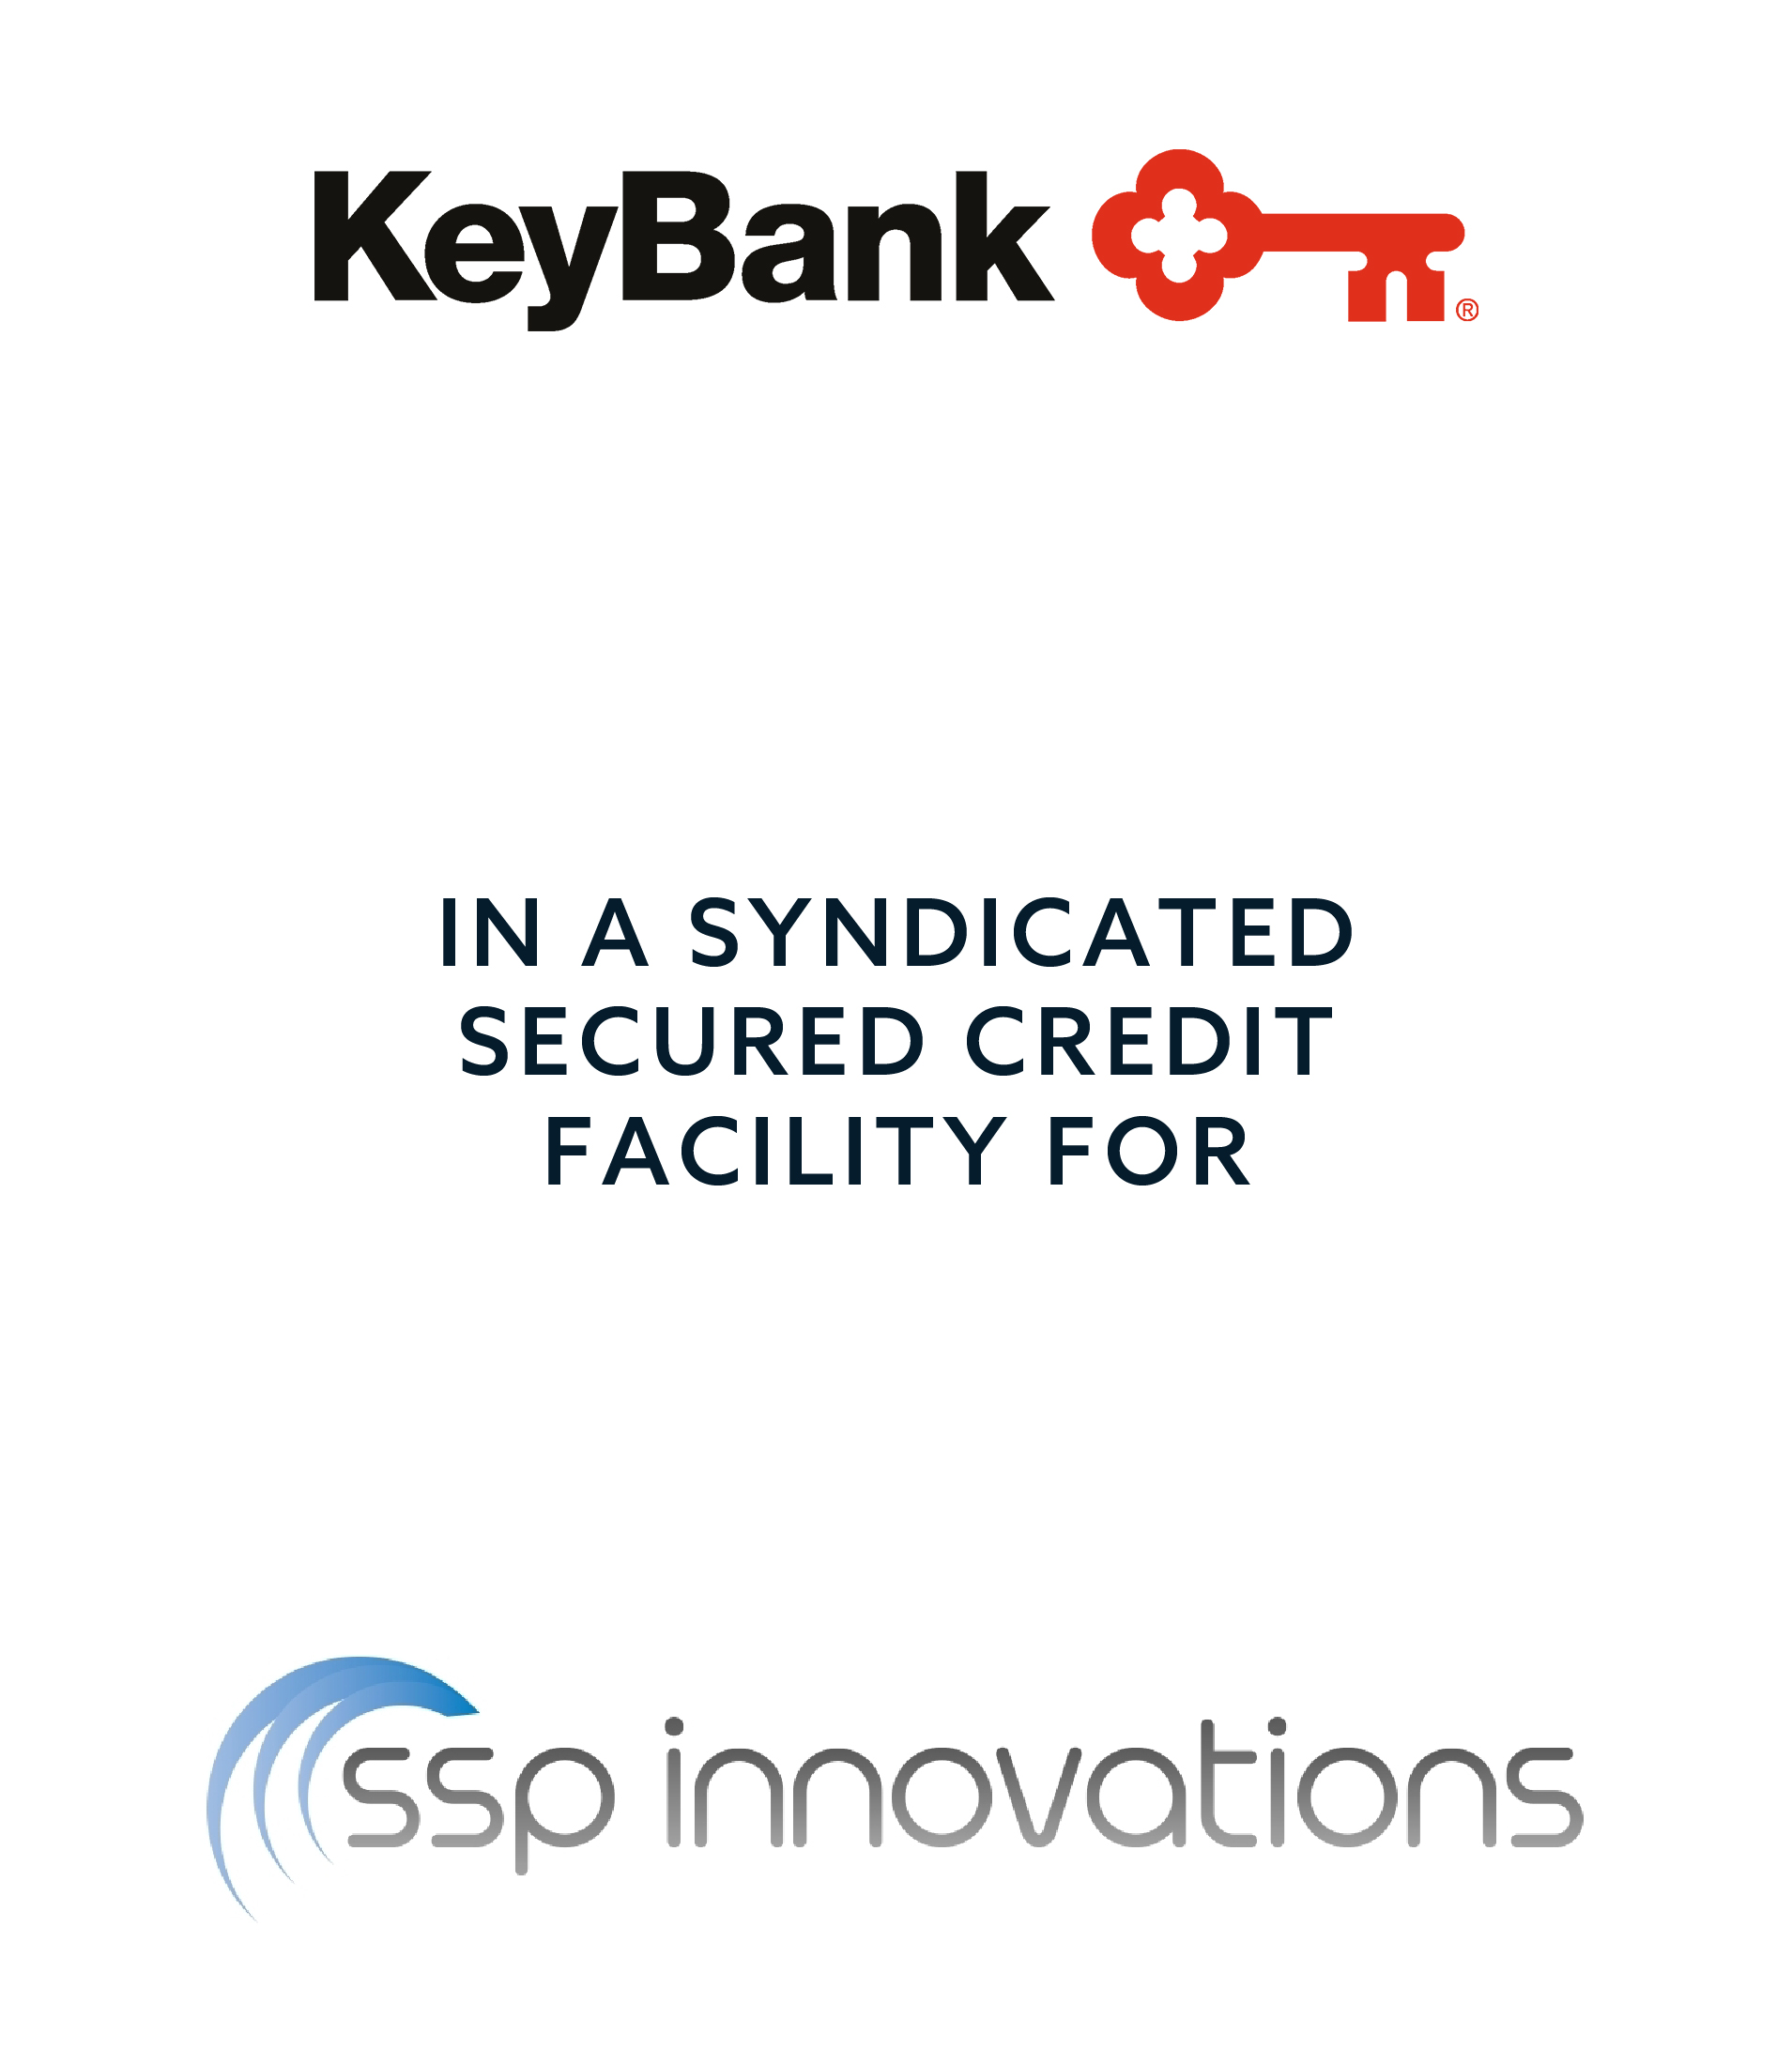 Key Bank_SSP Innovations_06433.0361